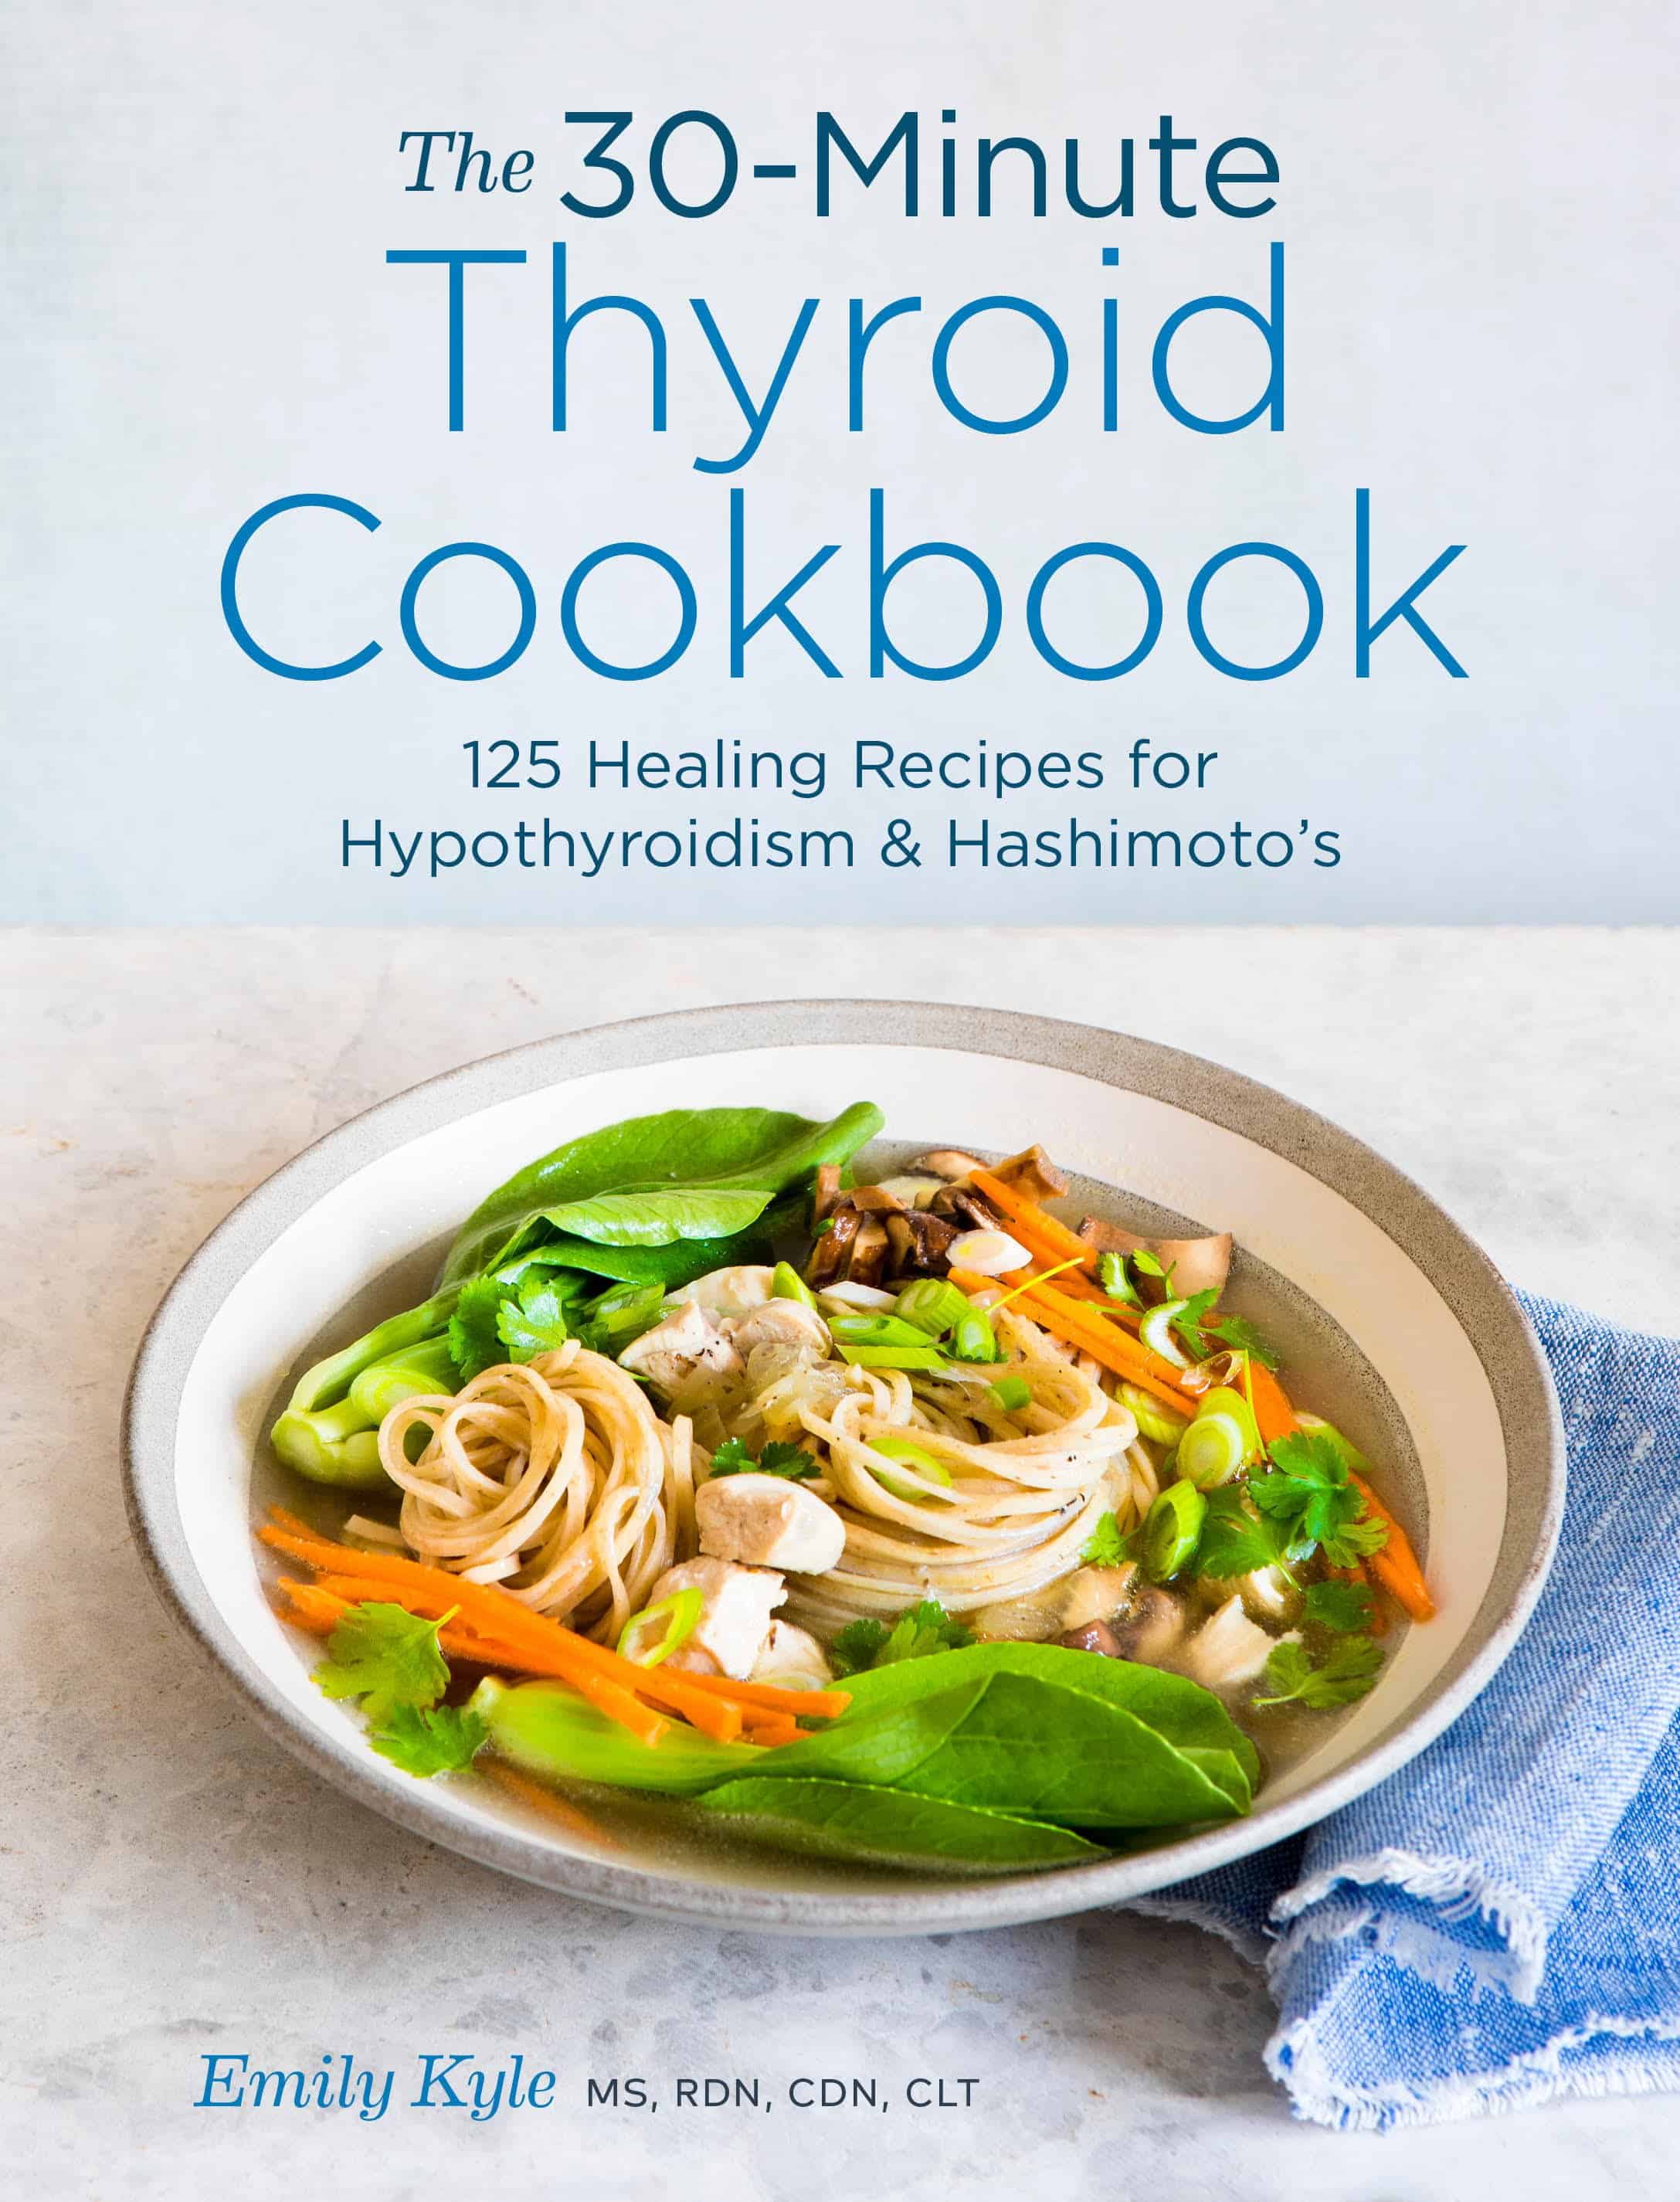 Thai Peanut Lettuce Wraps + 30 Minute Thyroid Cookbook Review @shawsimpleswaps #thyroidhealth #cookingforhealth #Paleo